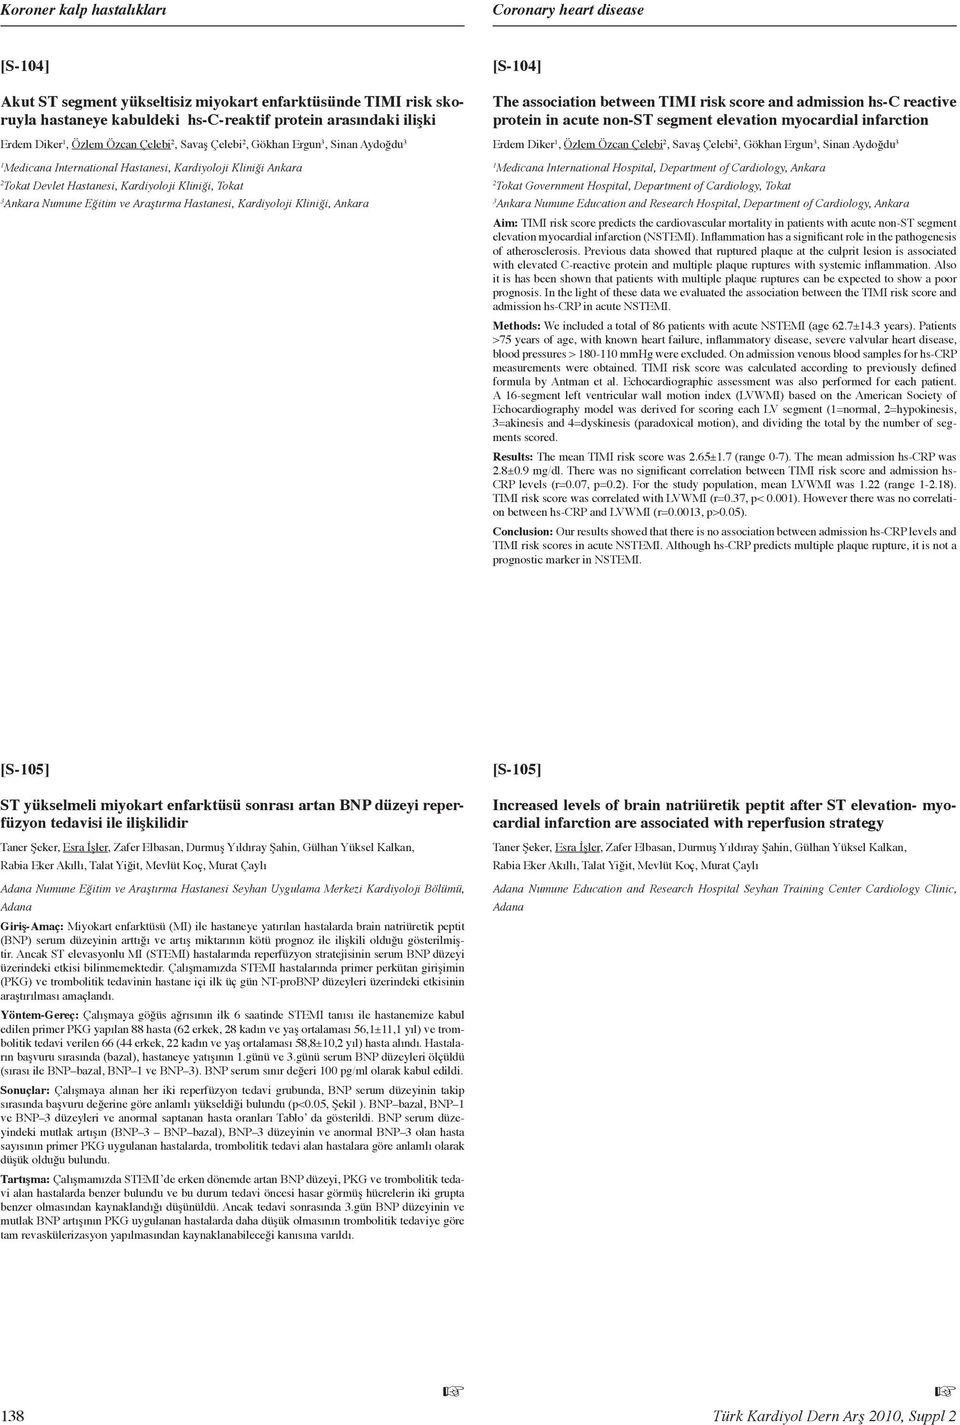 Araştırma Hastanesi, Kardiyoloji Kliniği, Ankara [S-04] The association between TIMI risk score and admission hs-c reactive protein in acute non-st segment elevation myocardial infarction Erdem